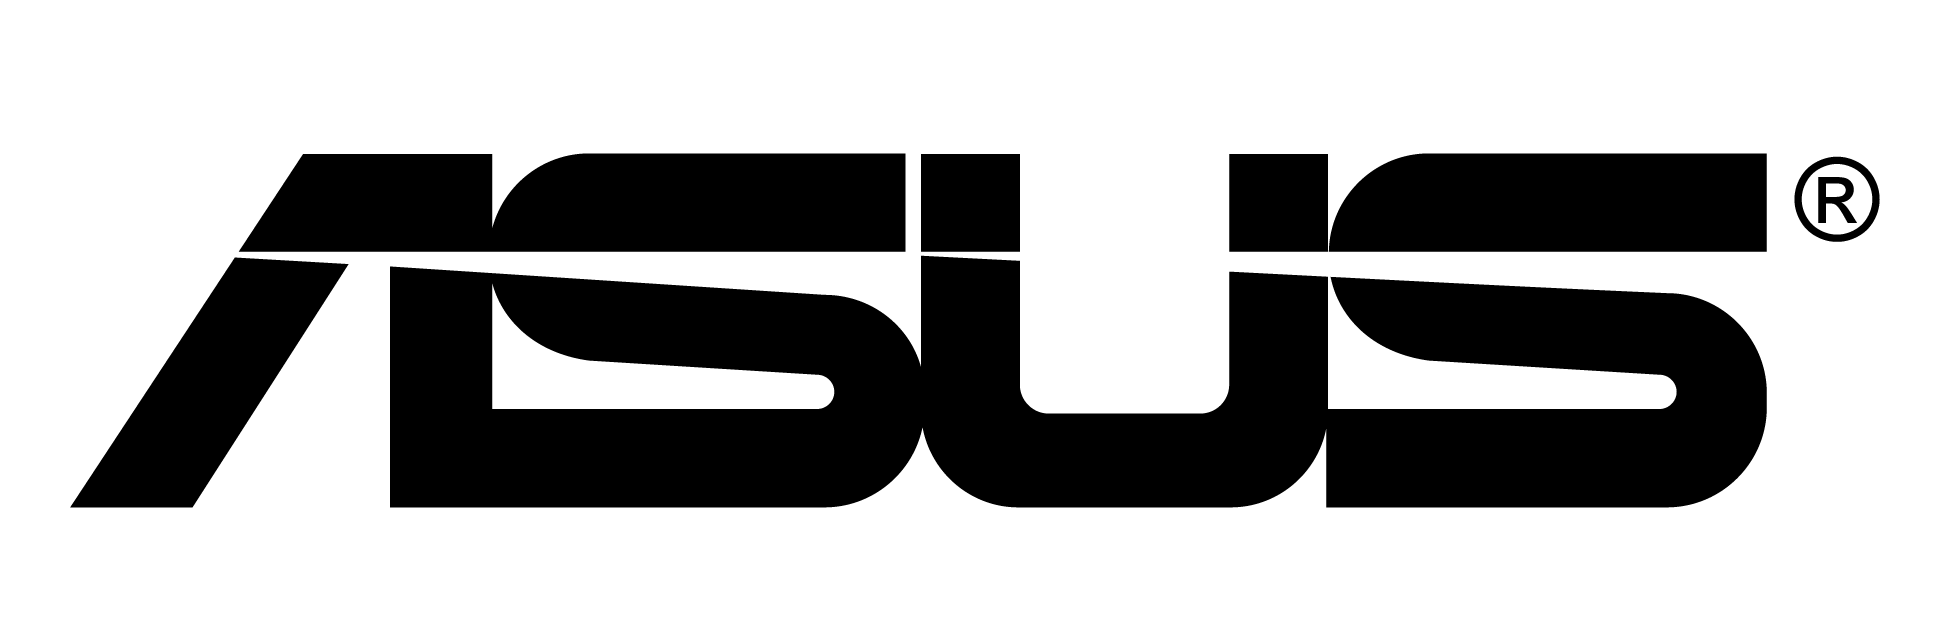 Asus-logo.png